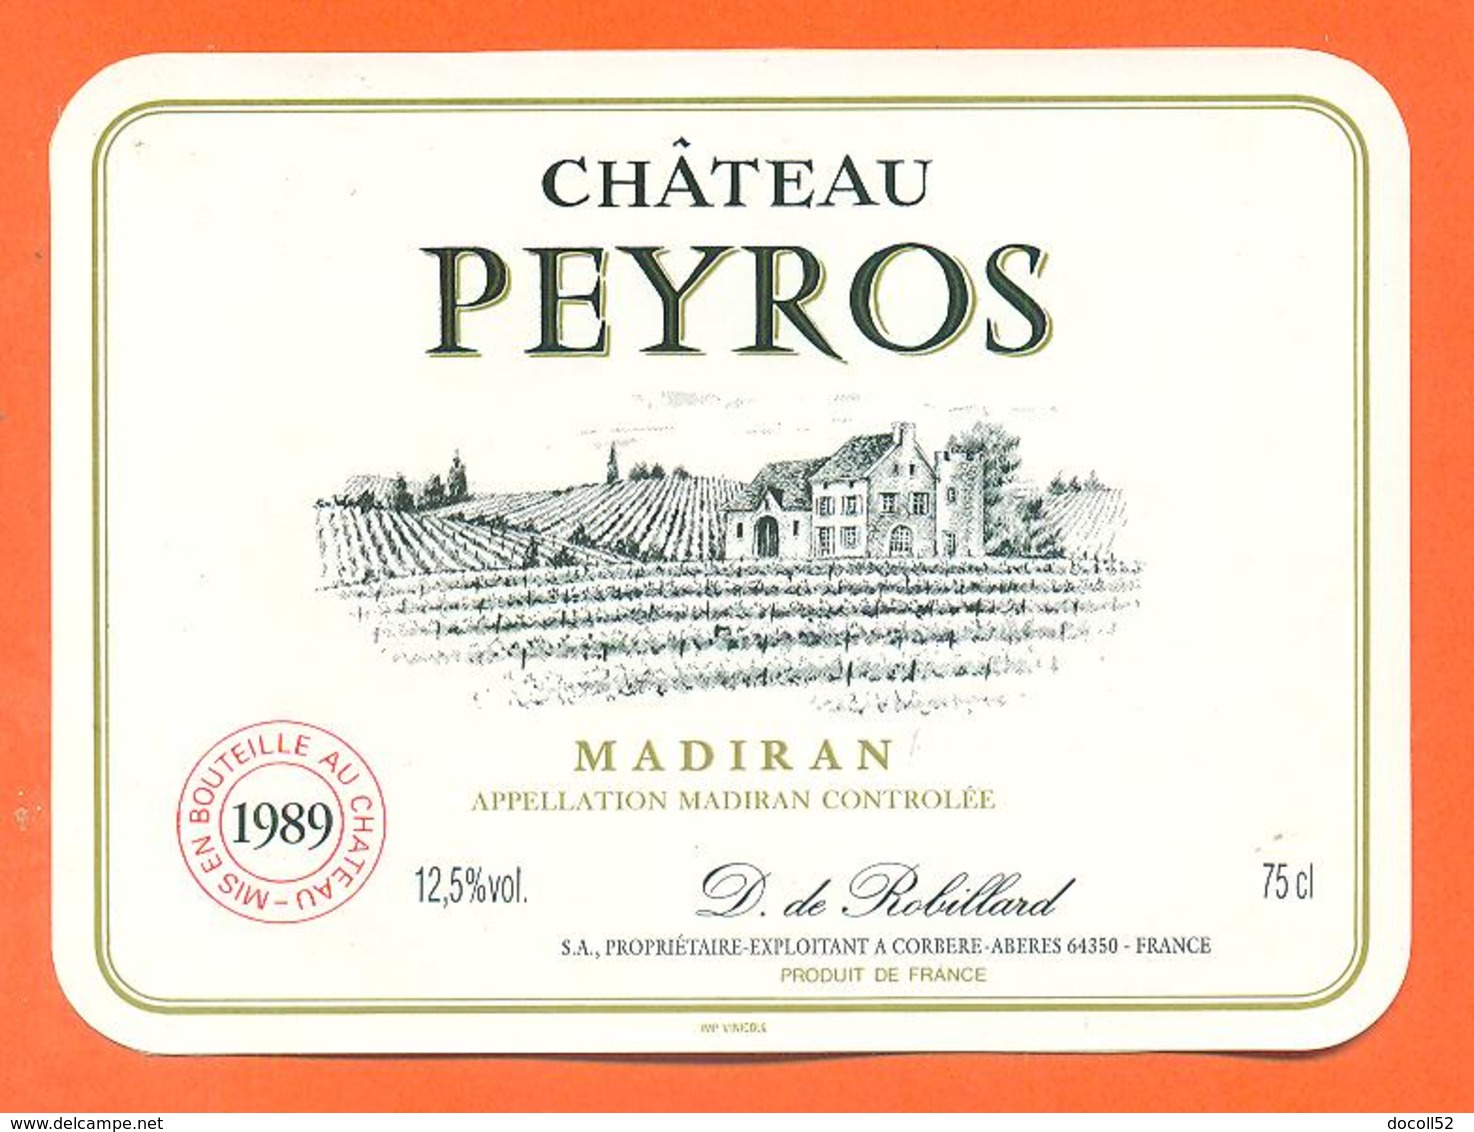 étiquette Vin De Madiran Chateau Peyros 1989 D De Robillard à Corbere Aberes - 75 Cl - Madiran